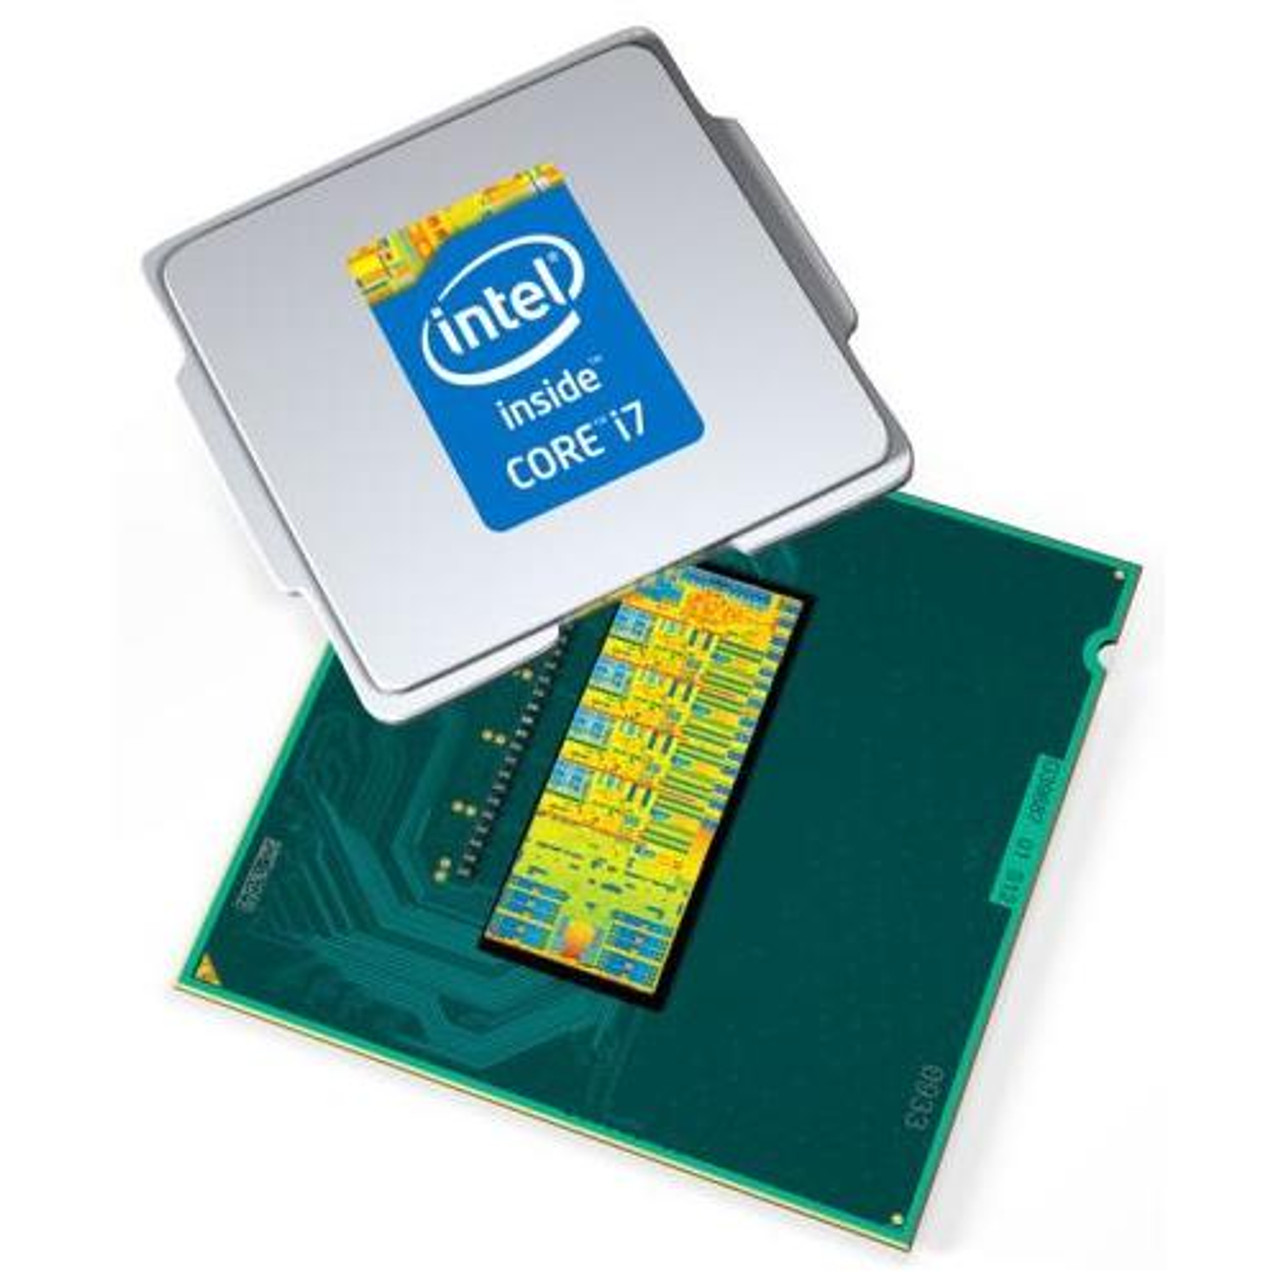 i7-4800MQ Intel Core i7 Mobile 2.70 GHz Processor Unboxed OEM